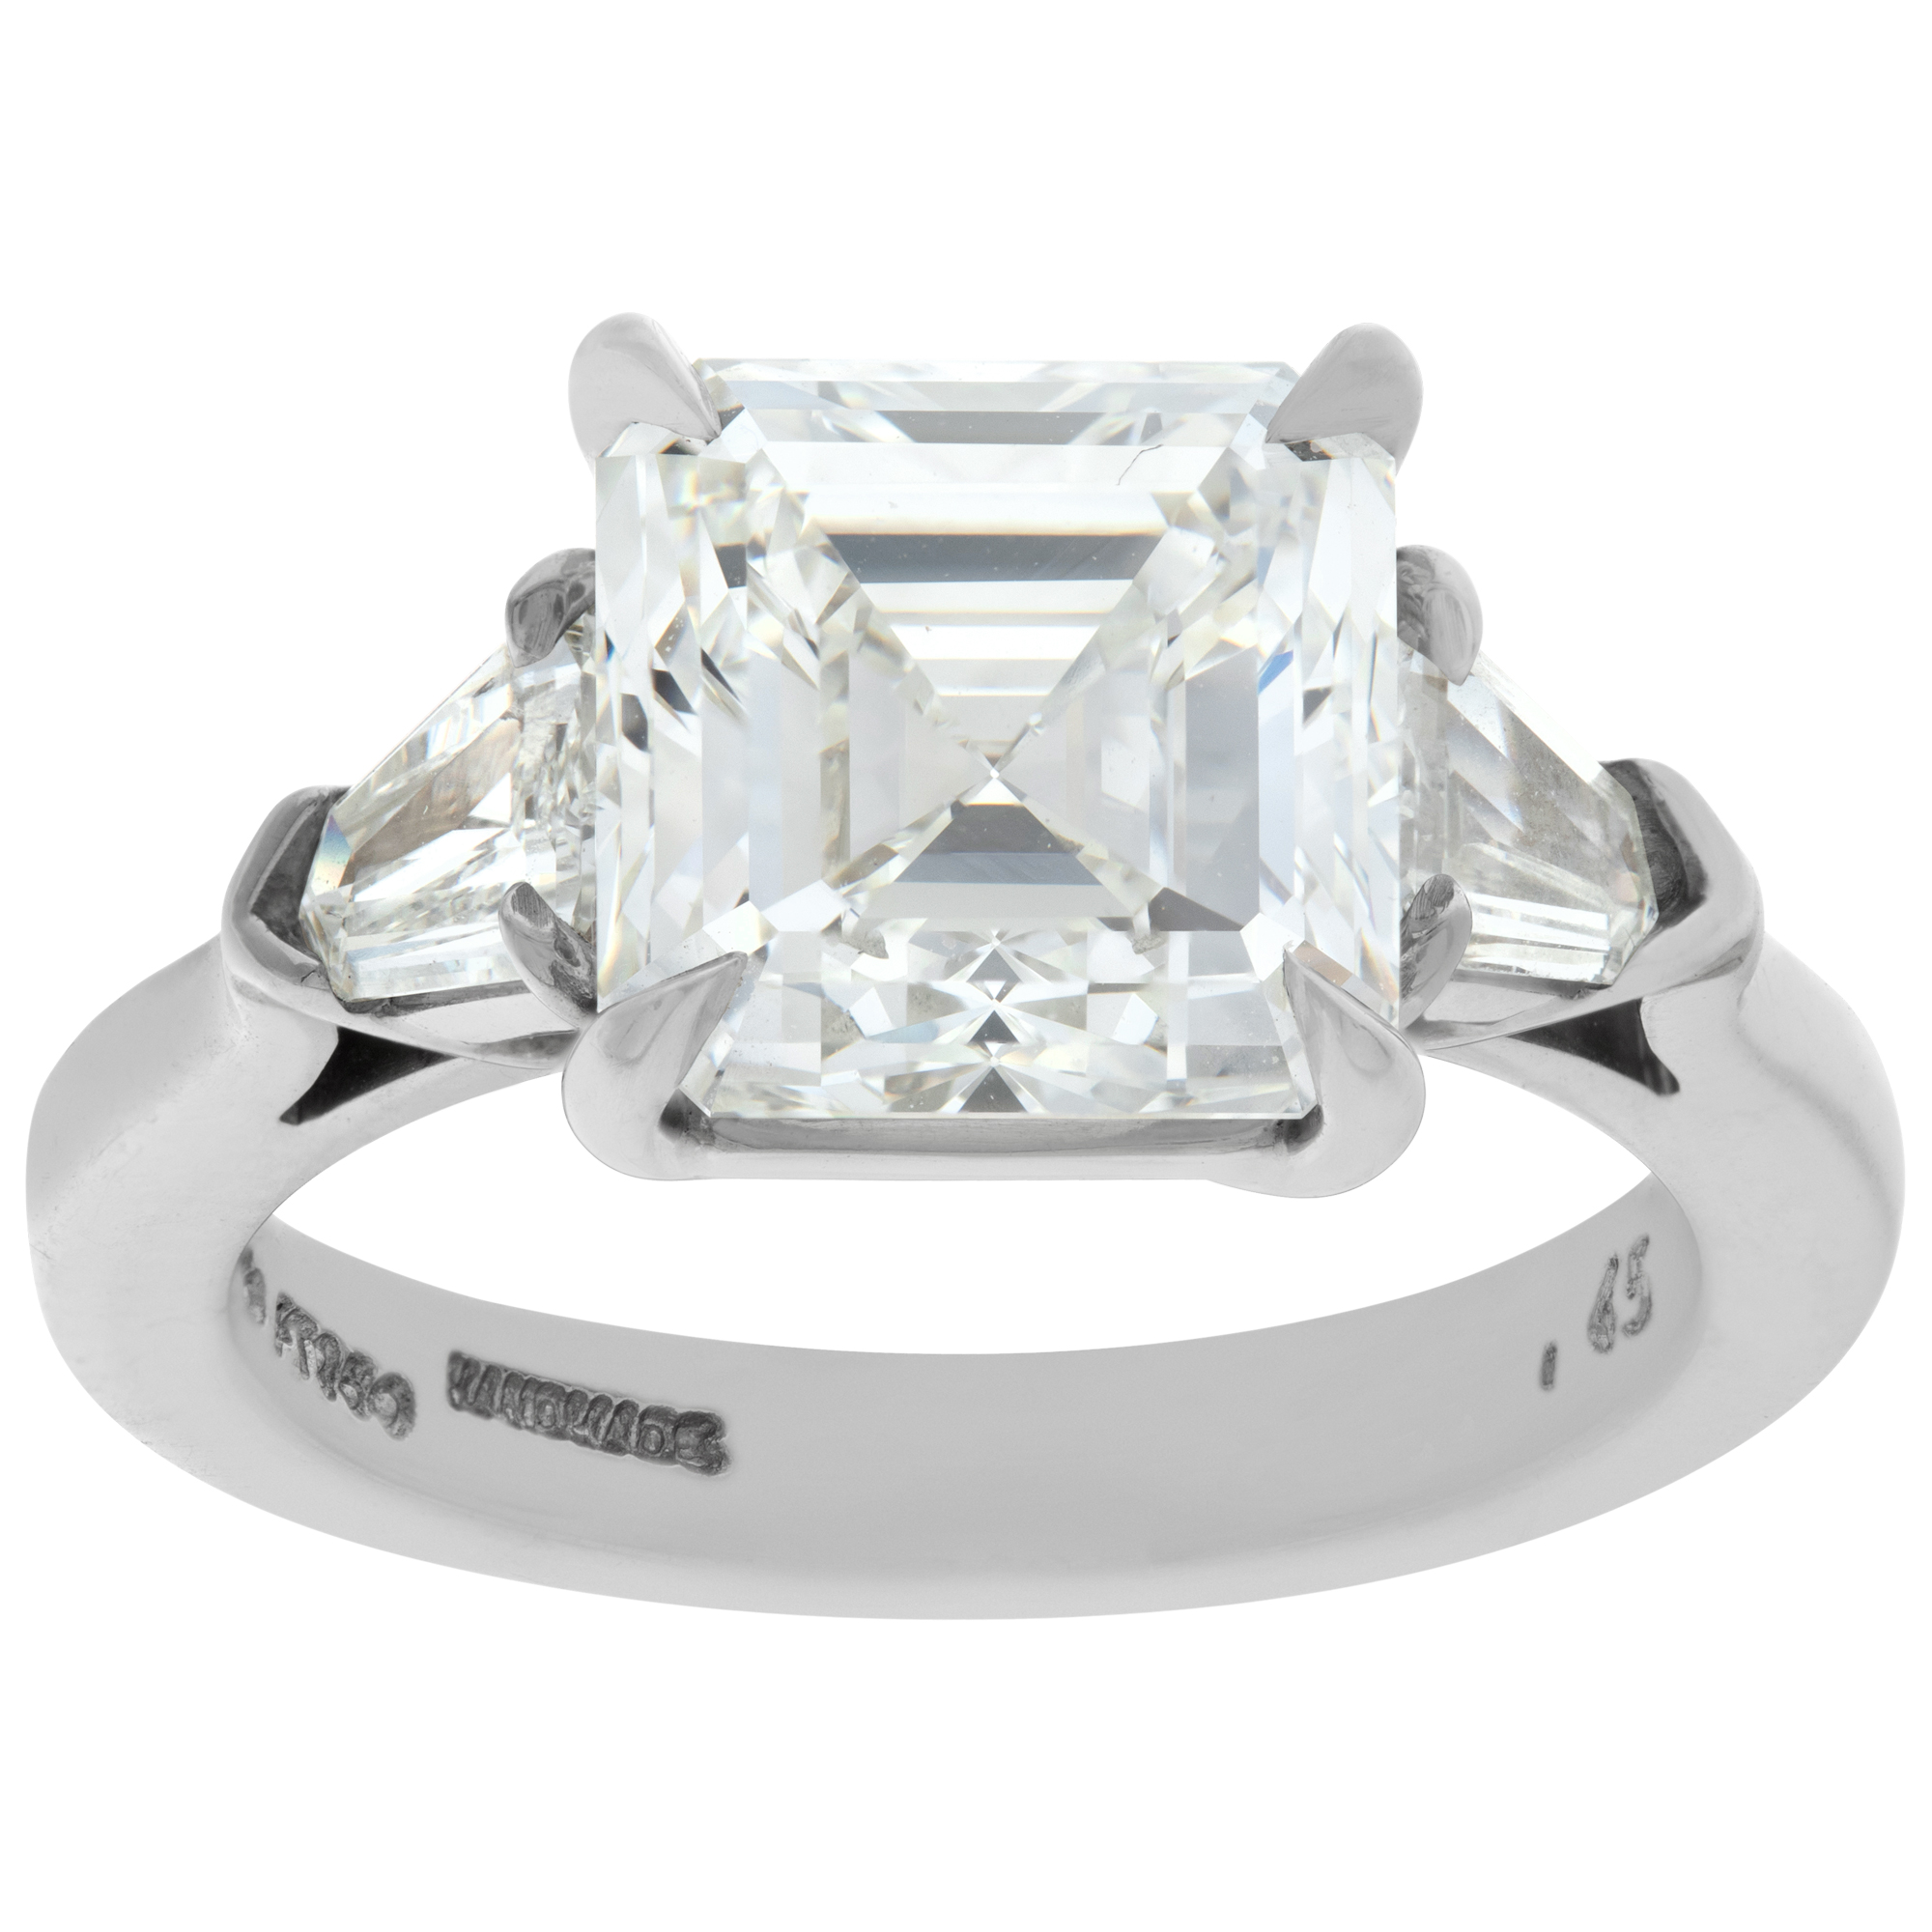 GIA certified square emerald cut diamond 4.08 carat (G color, VVS1 clarity) ring set in platinum image 1